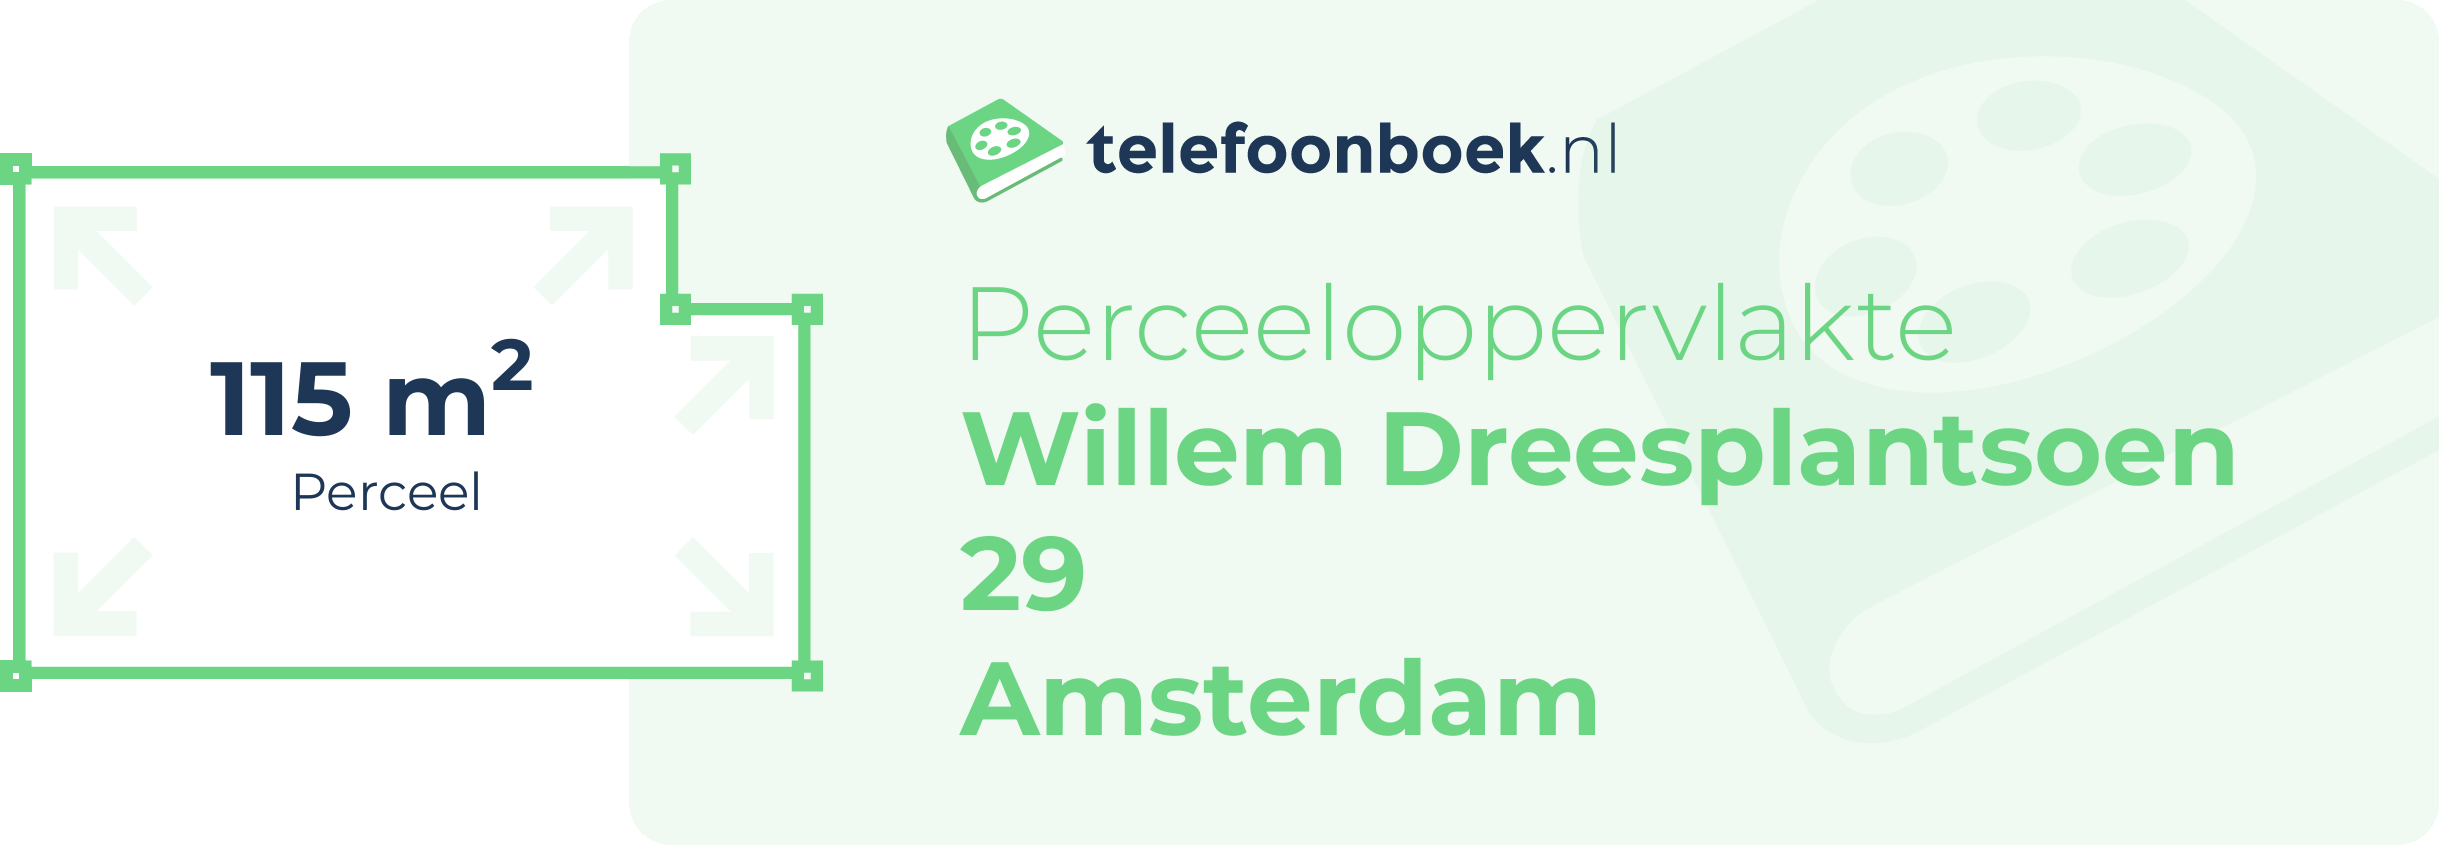 Perceeloppervlakte Willem Dreesplantsoen 29 Amsterdam